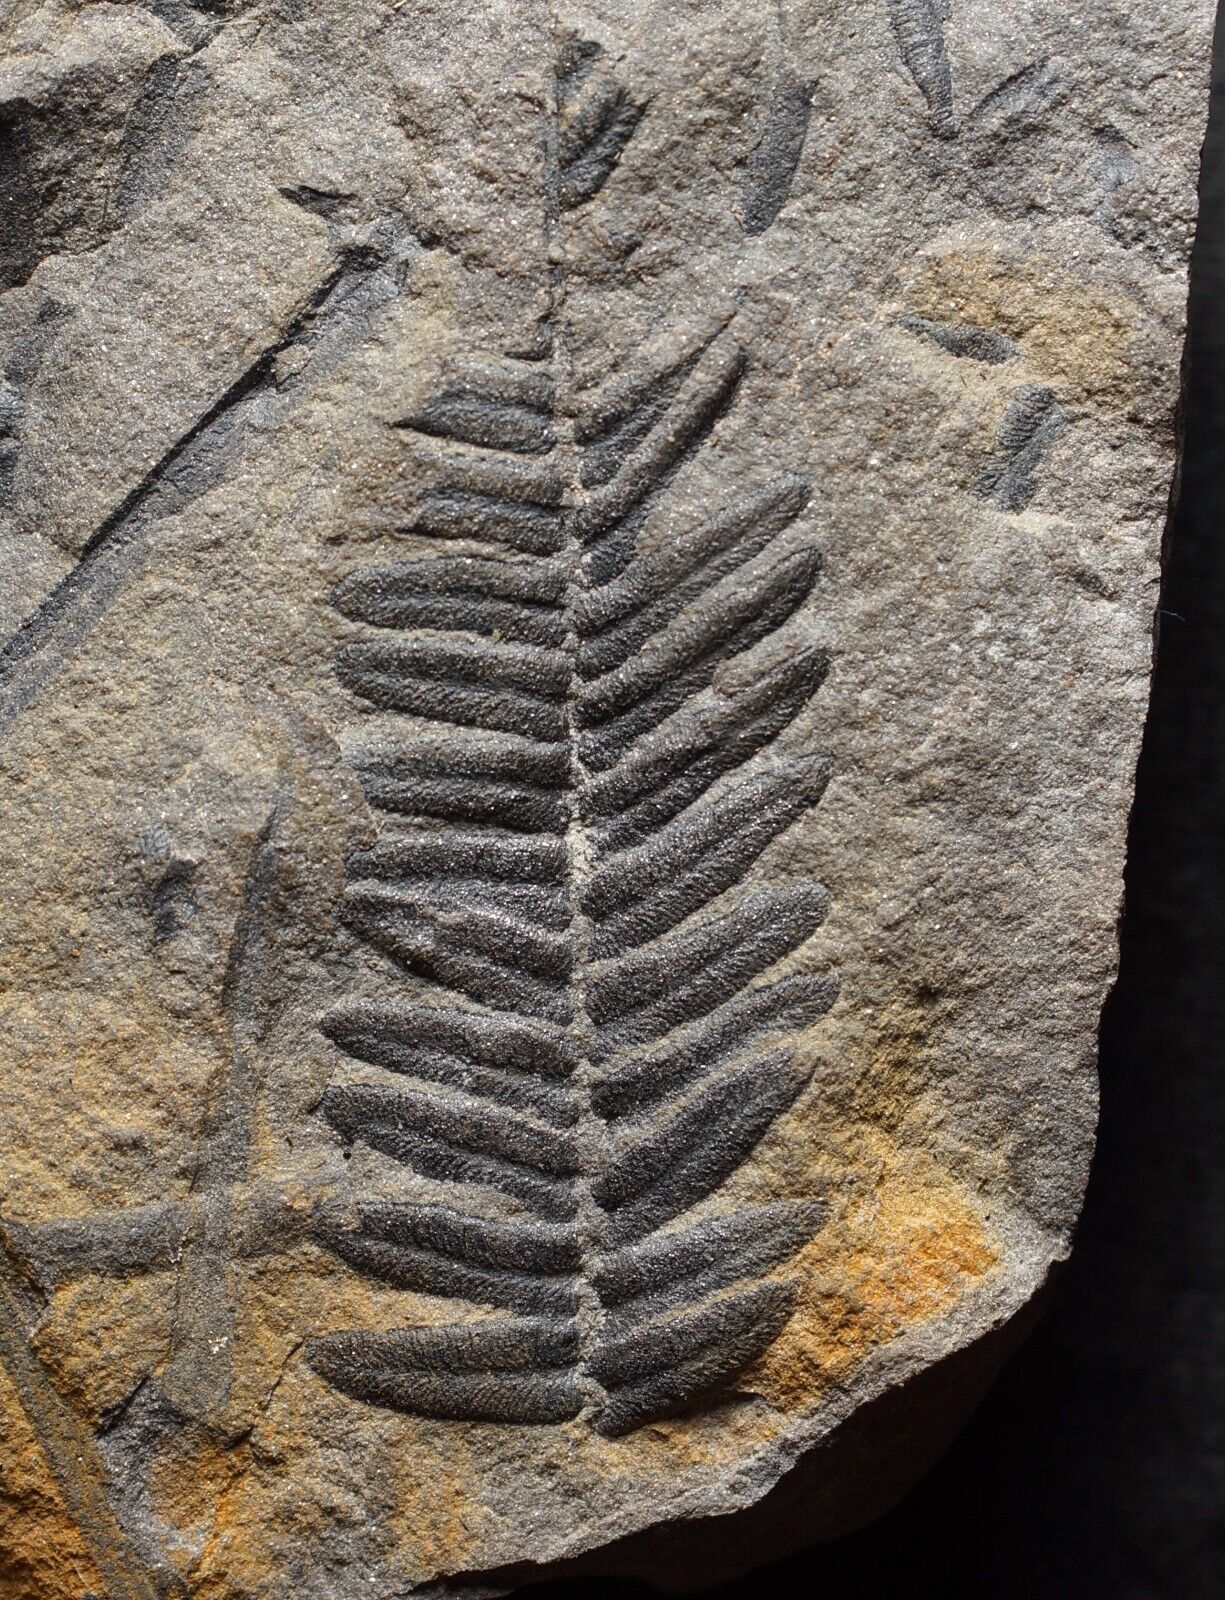 Fossil plant Carboniferous seed fern leaf Neuralethopteris neropteroides